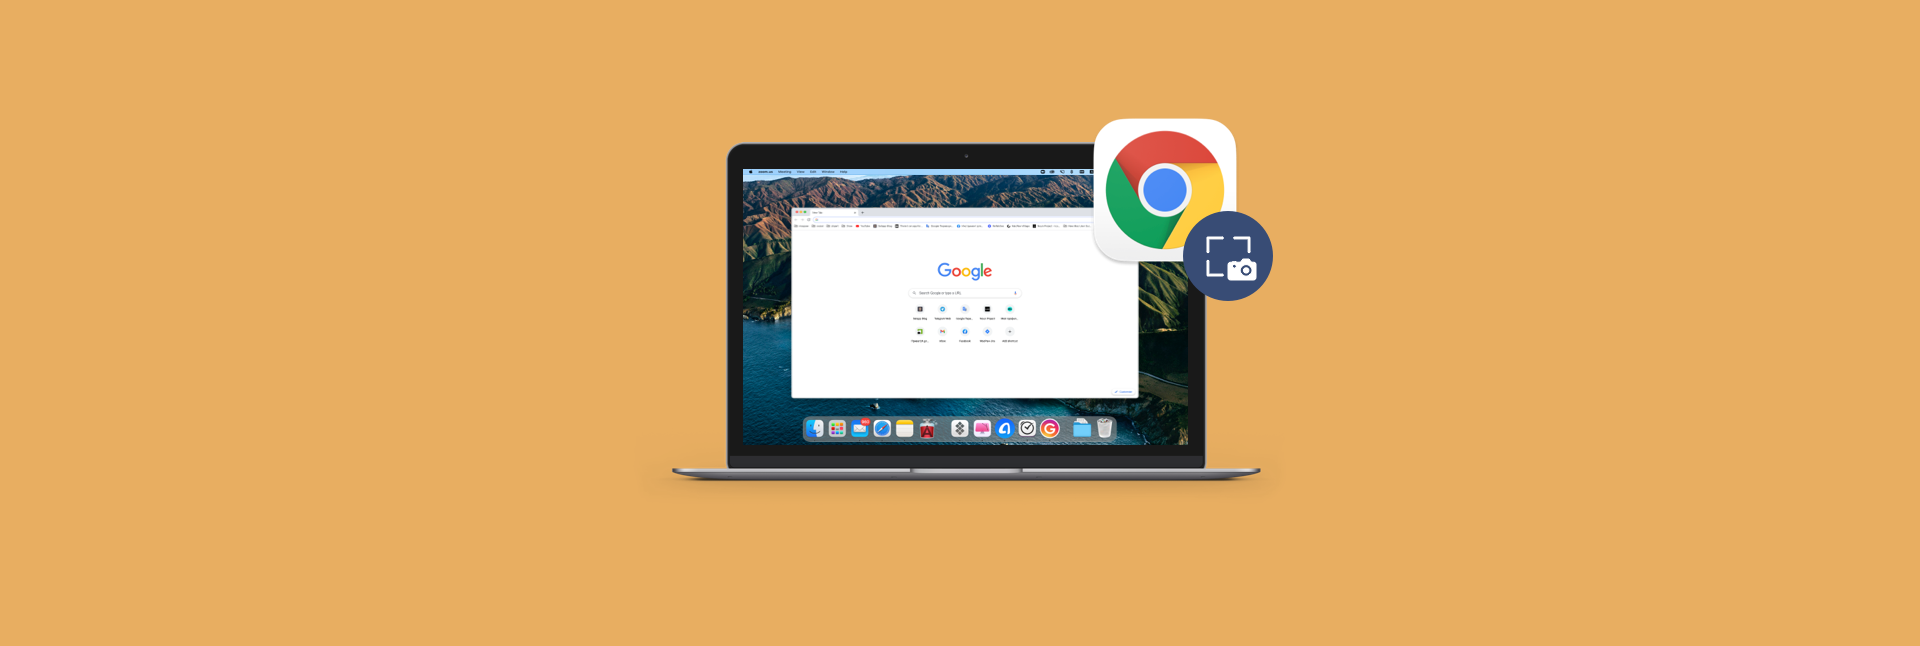 google chrome vs safari for mac